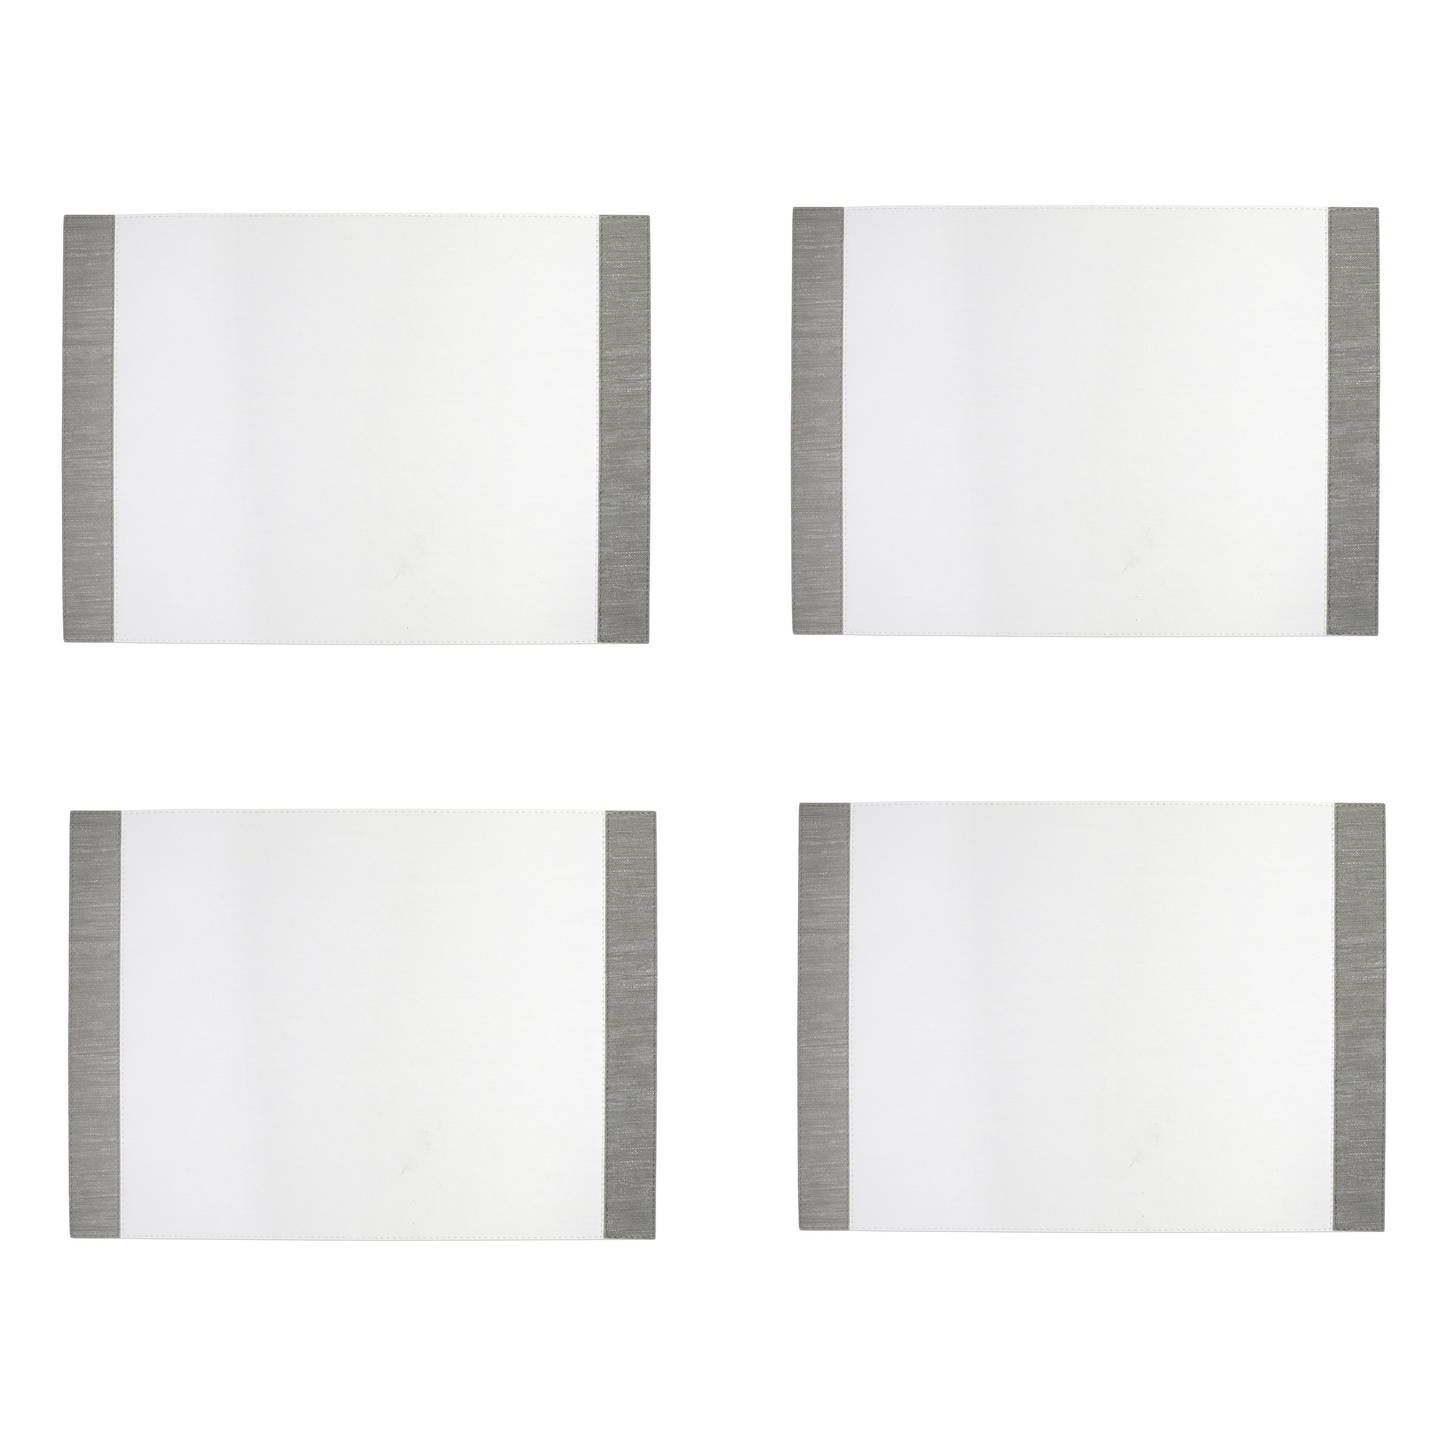 Vietri Reversible White/Gray Edged Rectangular Placemat (Set of 4)